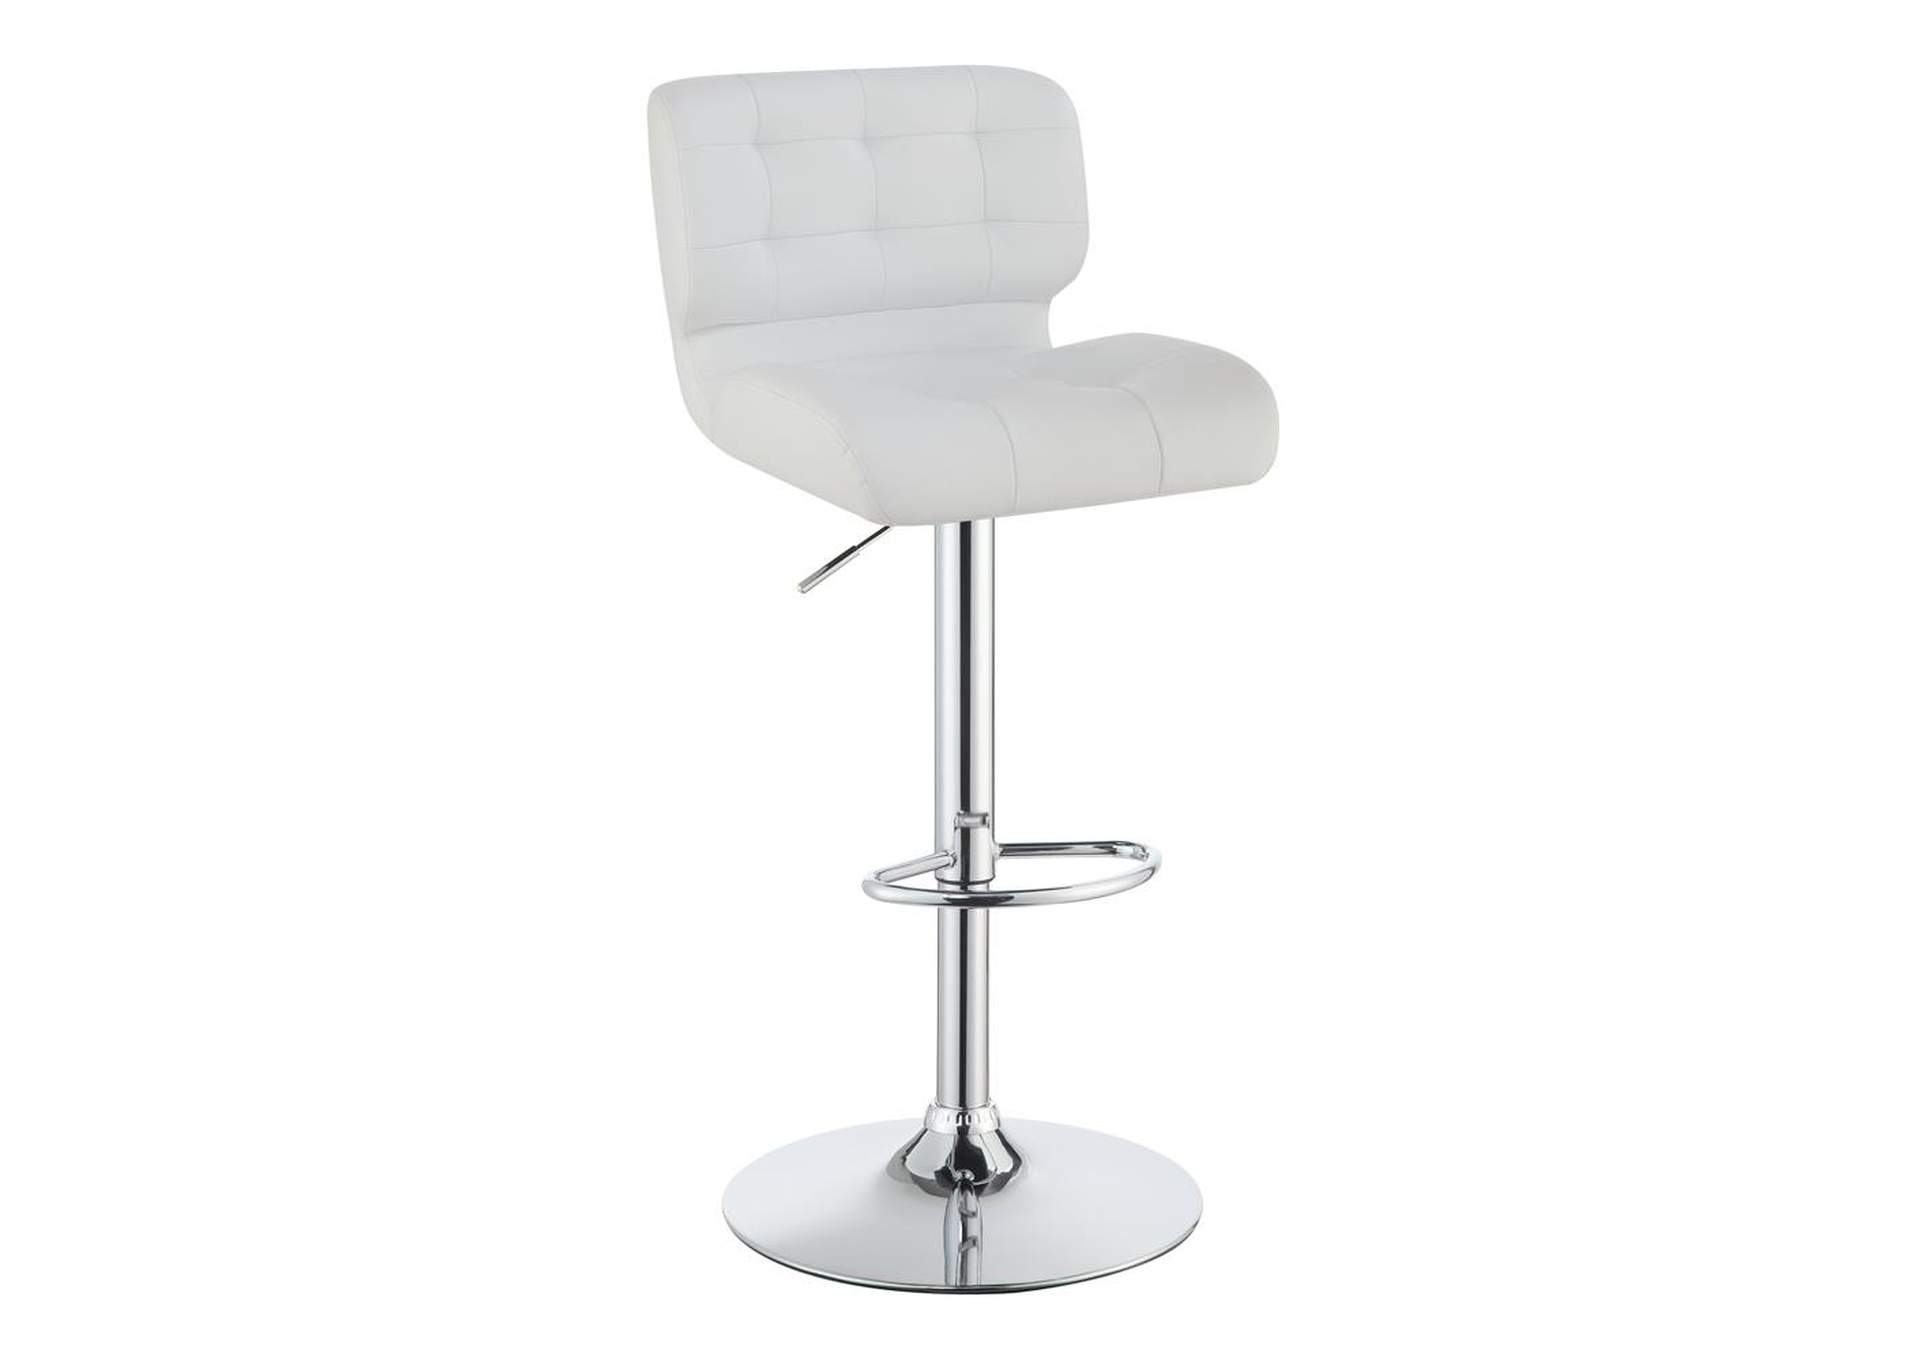 Upholstered Adjustable Bar Stools Chrome And White [Set of 2],Coaster Furniture